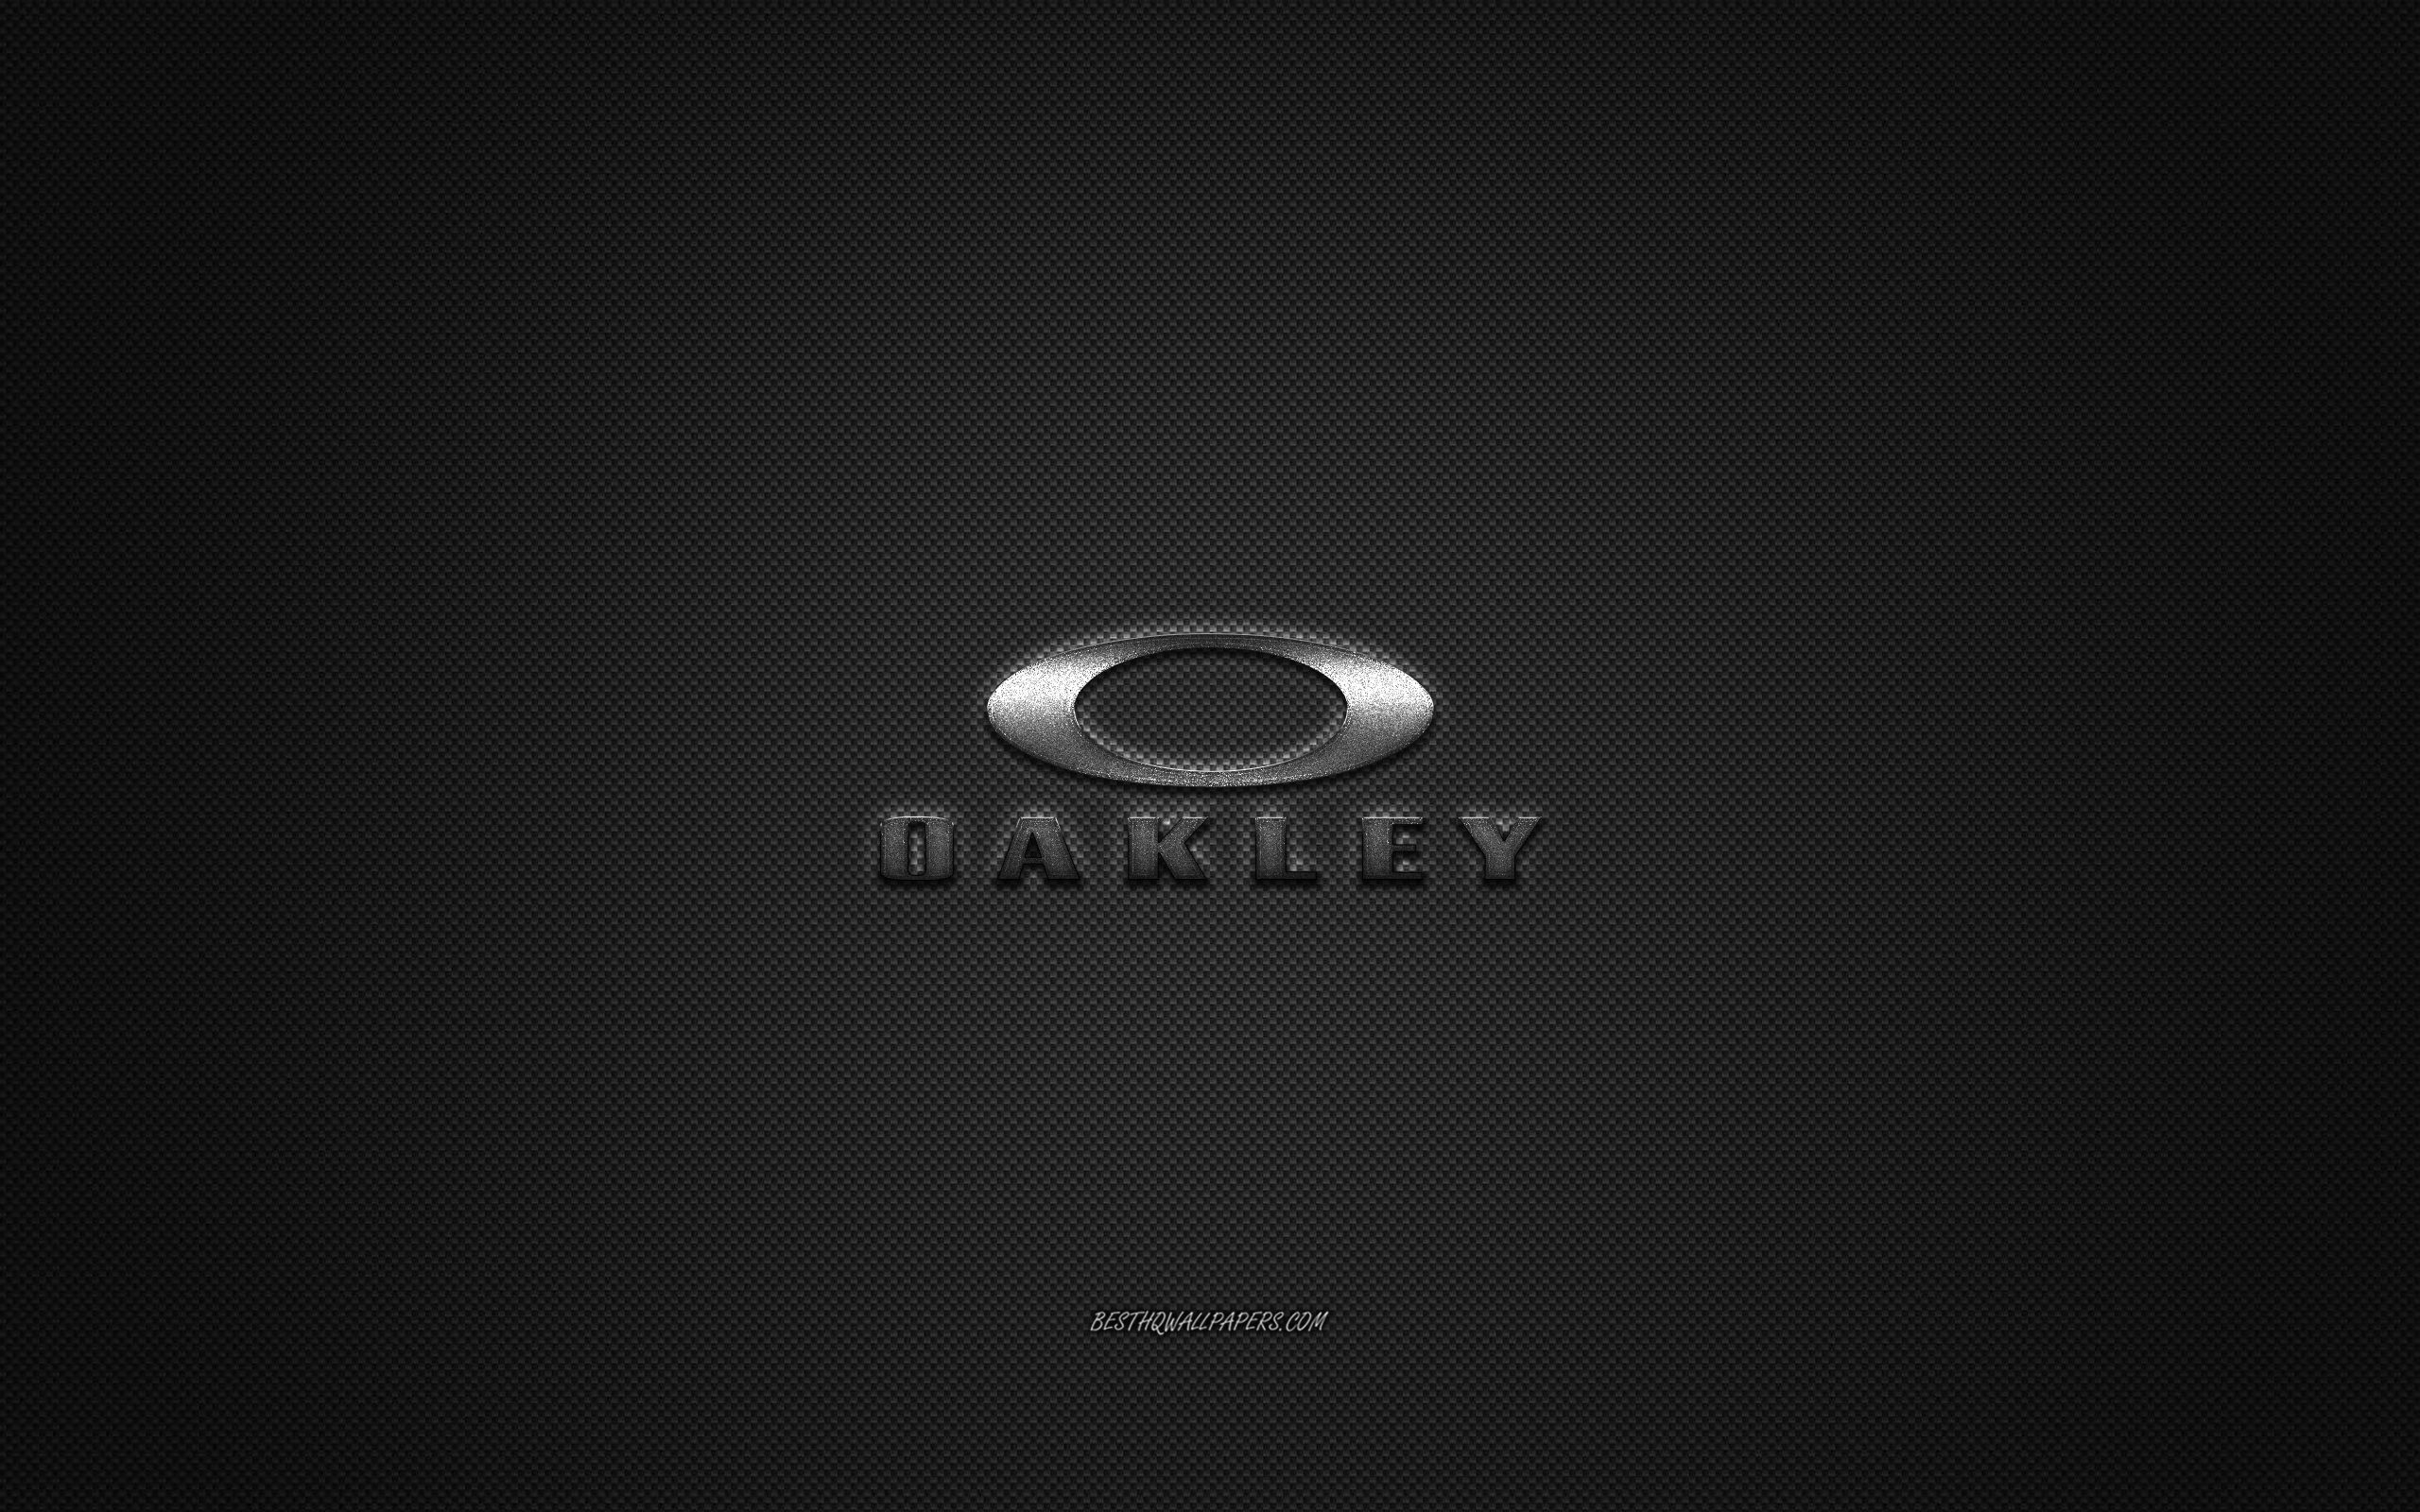 Download wallpaper Oakley logo, metal emblem, apparel brand